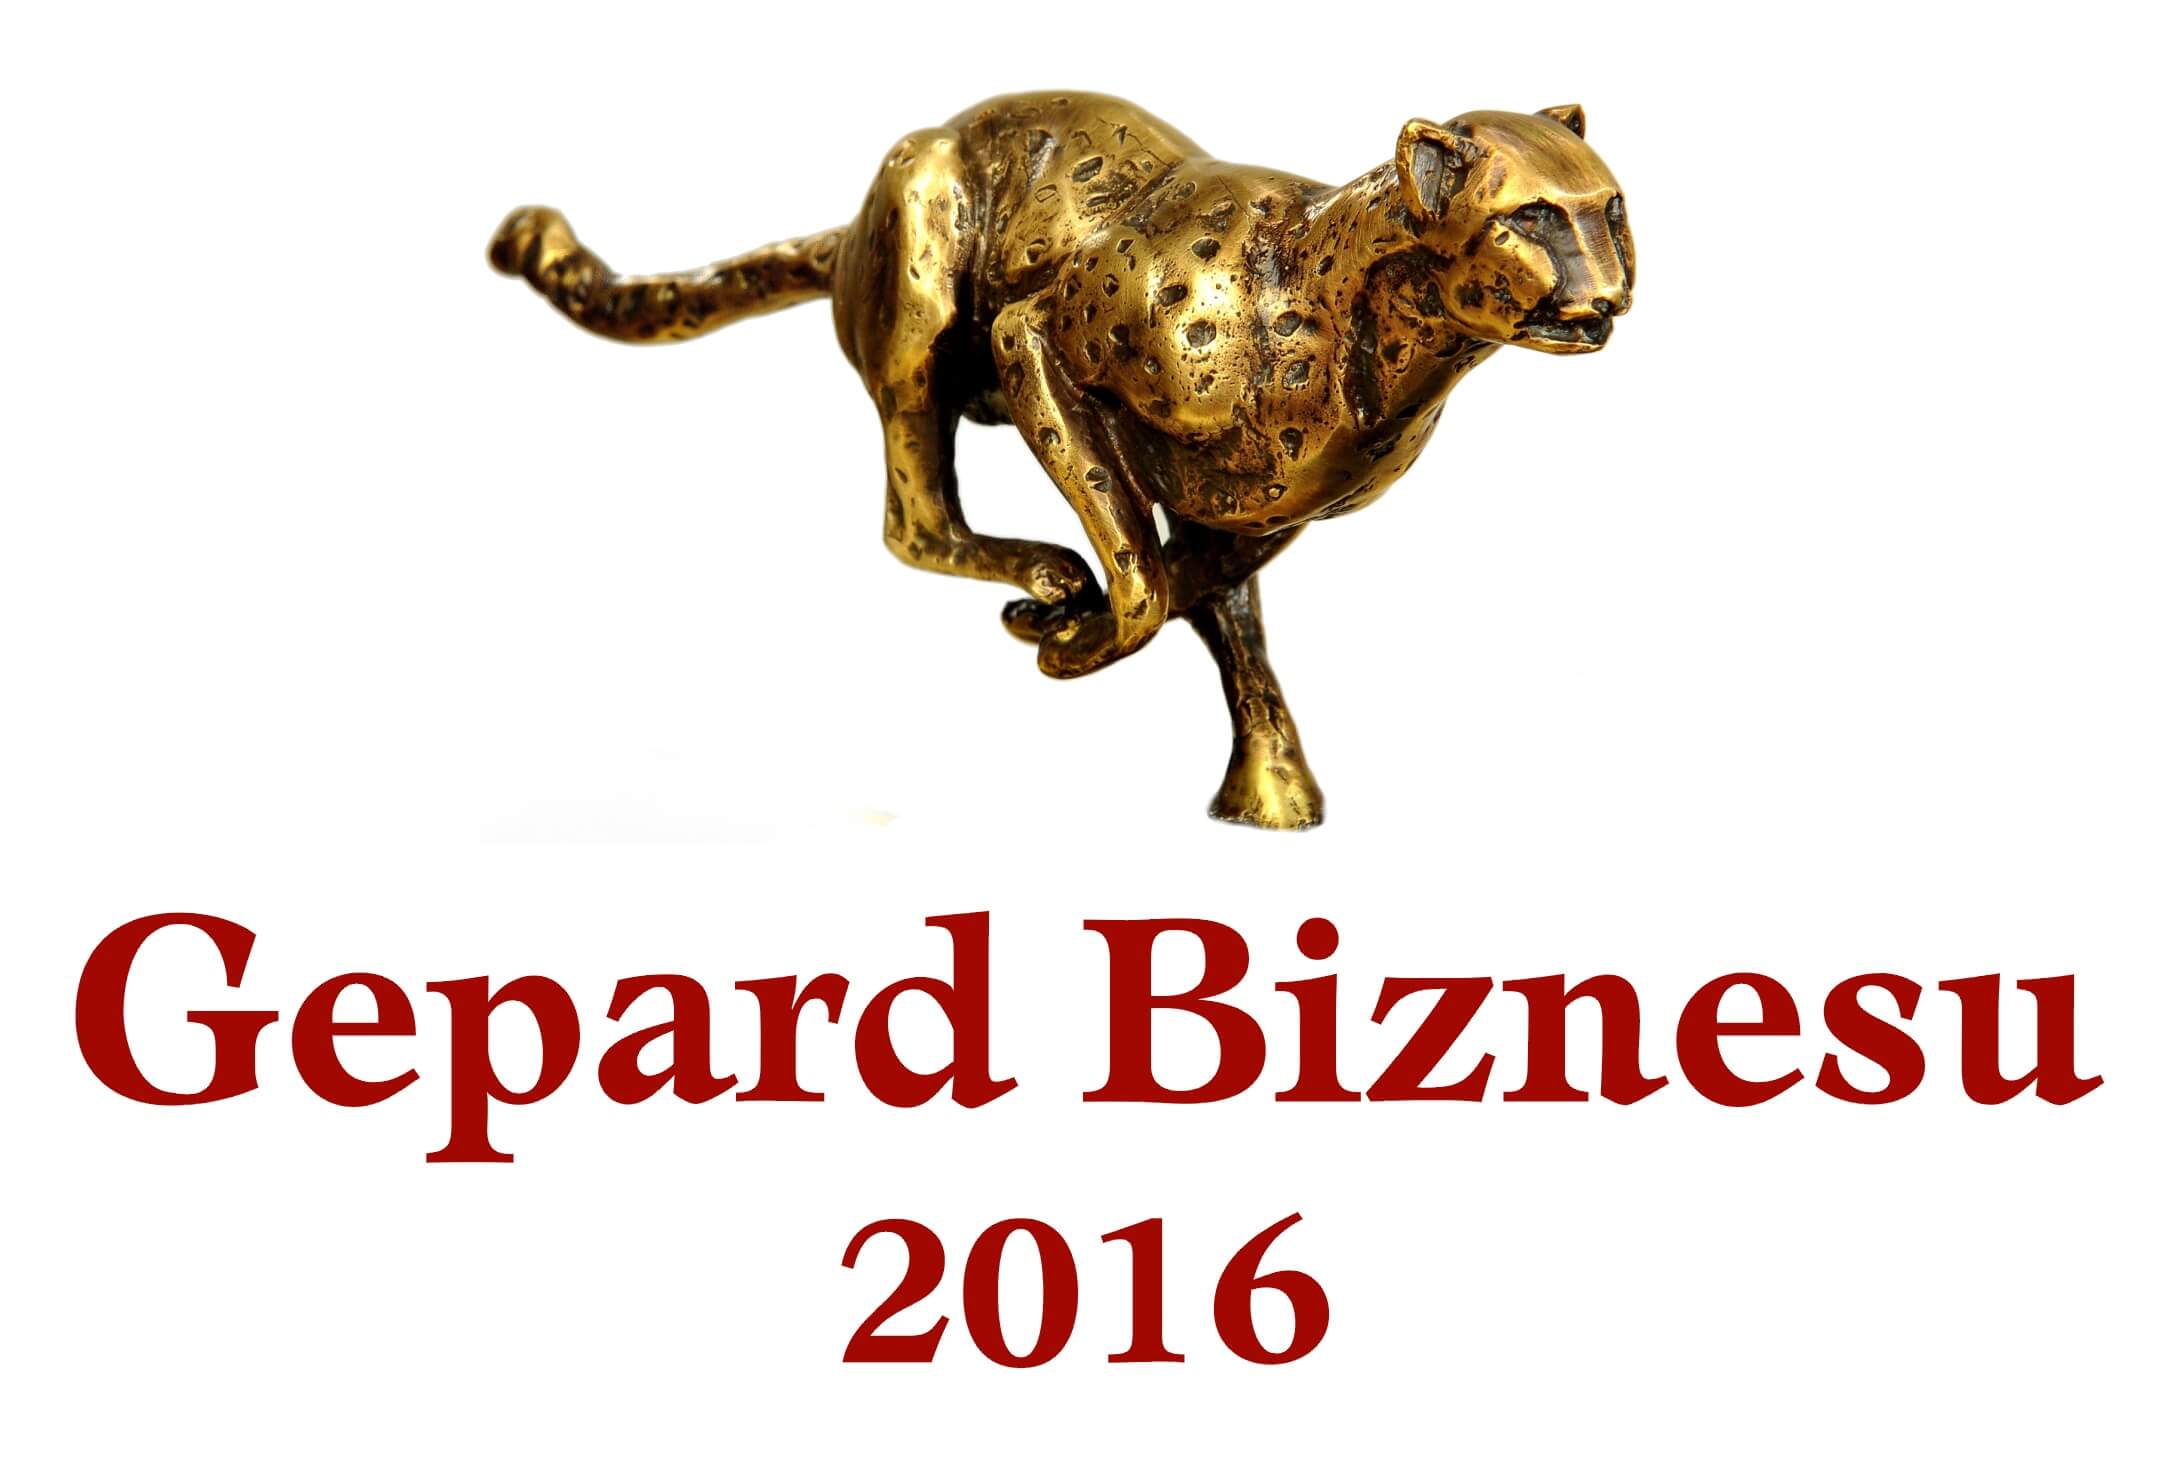 Gepard Biznesu 2016 dla Friday